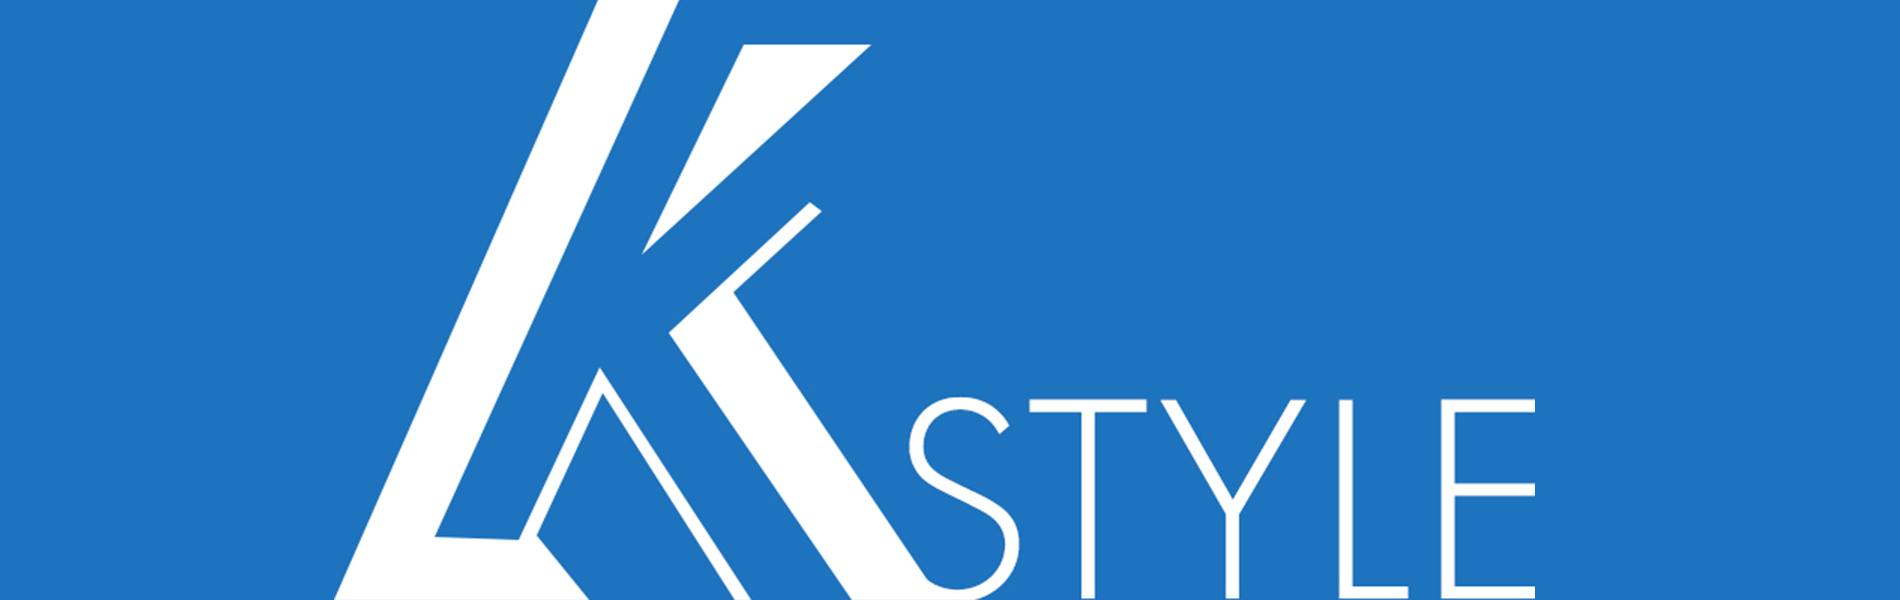 K-style.デザイン